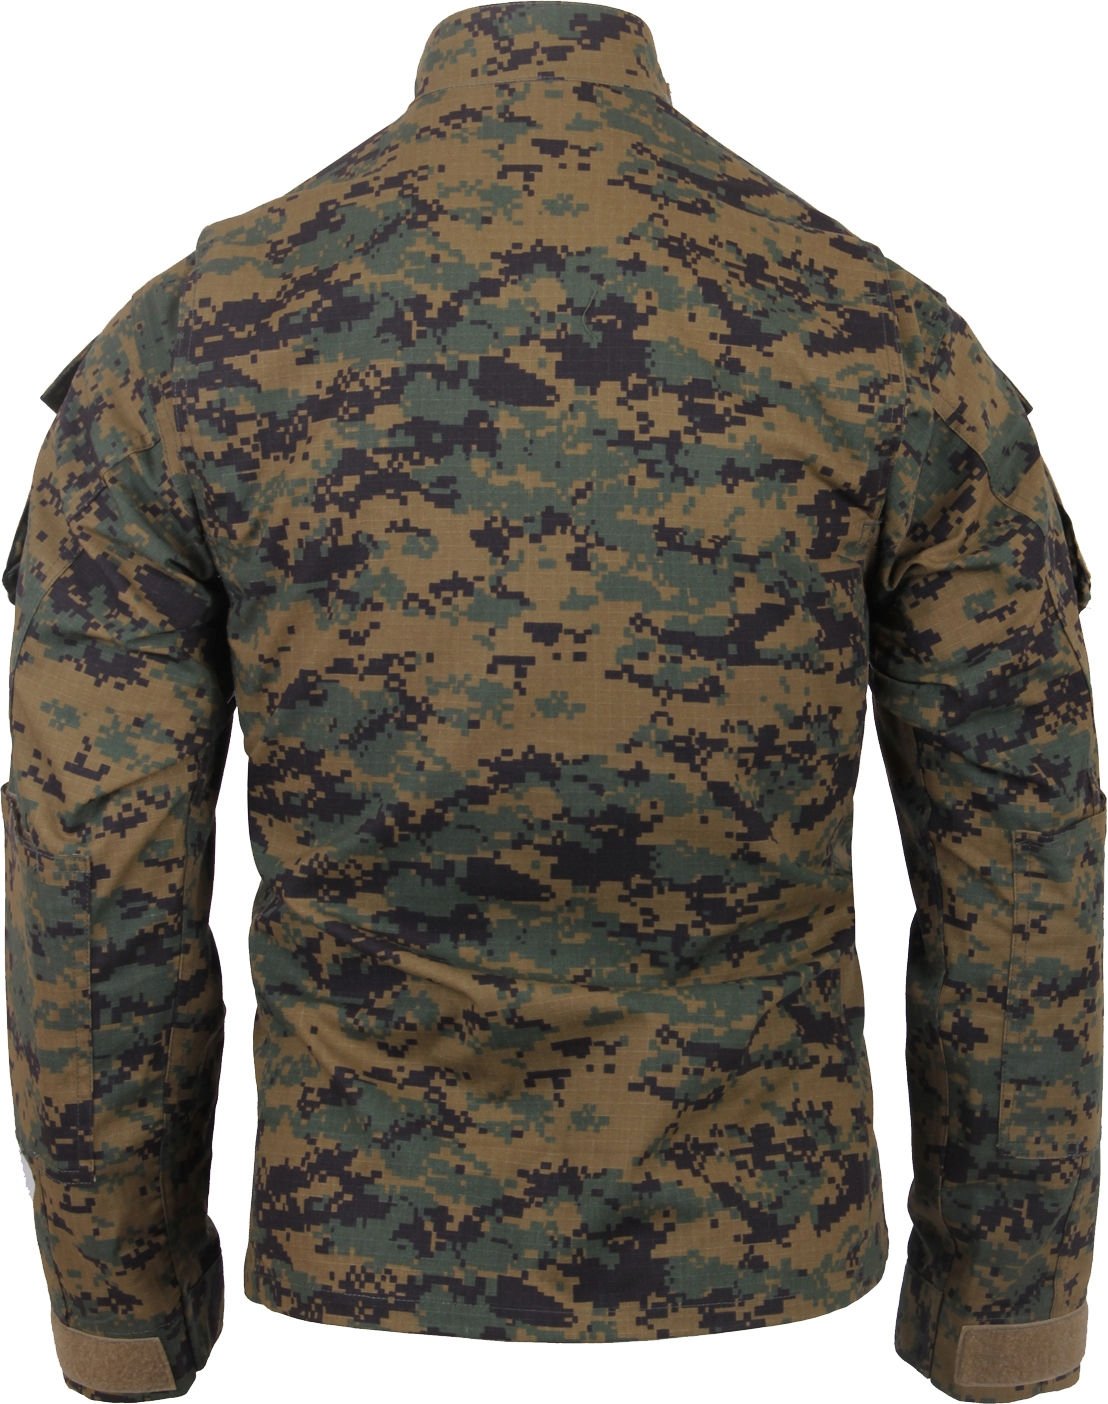 Digital Camouflage Uniform 42